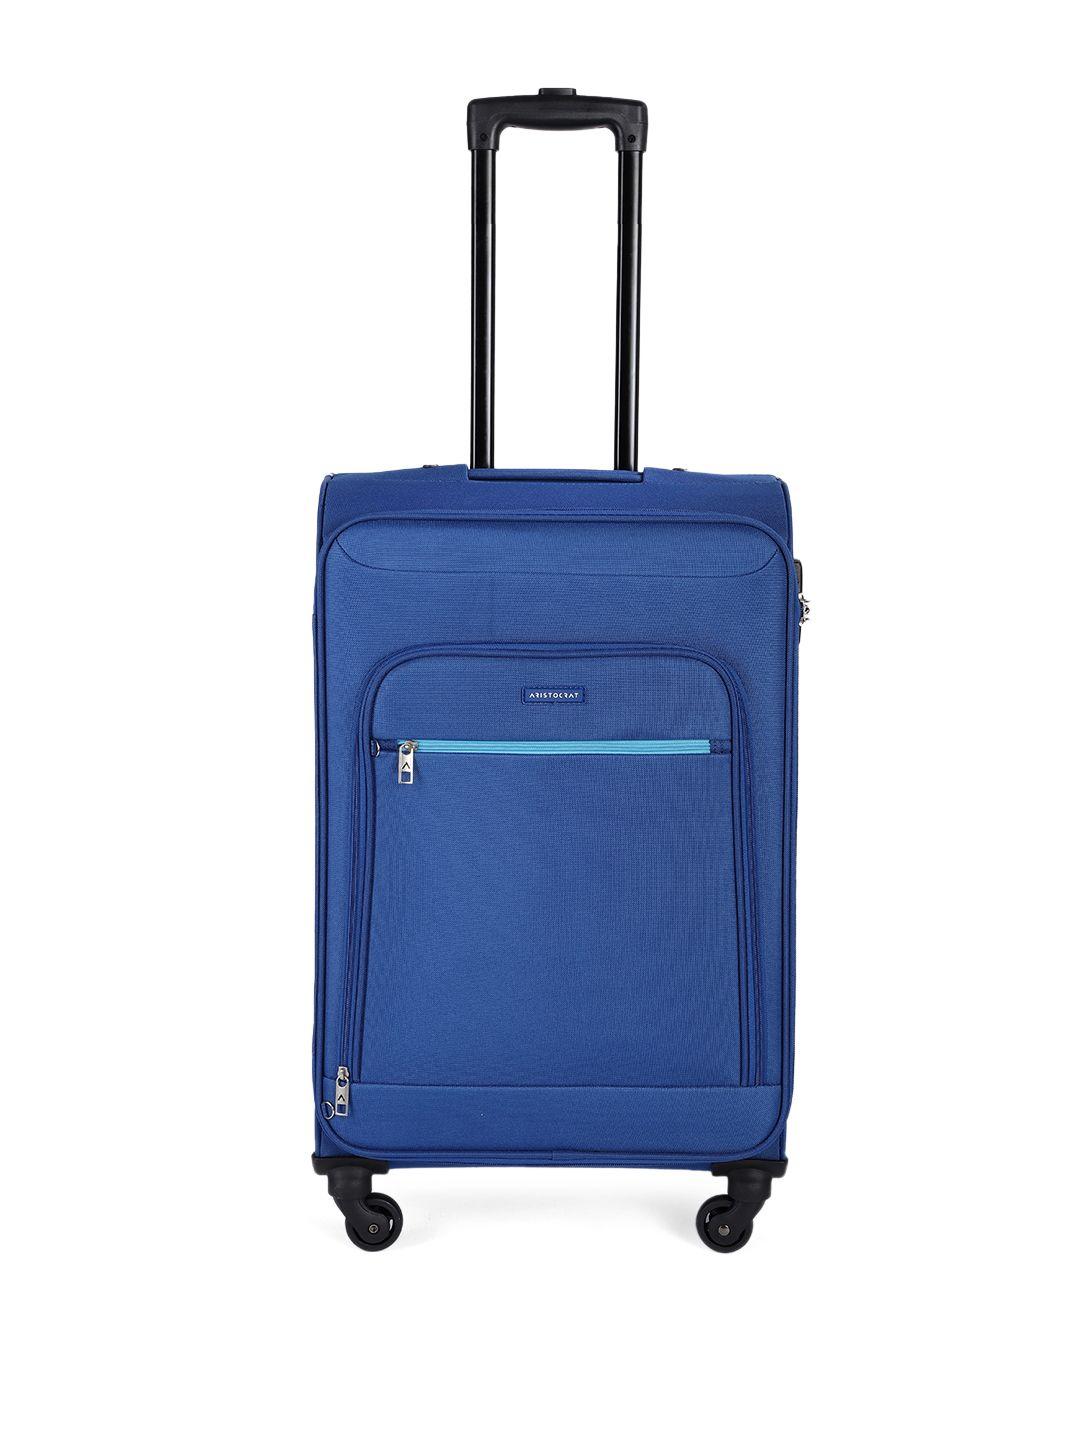 Aristocrat Unisex Bright Blue Solid Nile Exp Strolly 66 Medium Luggage Trolley Suitcase